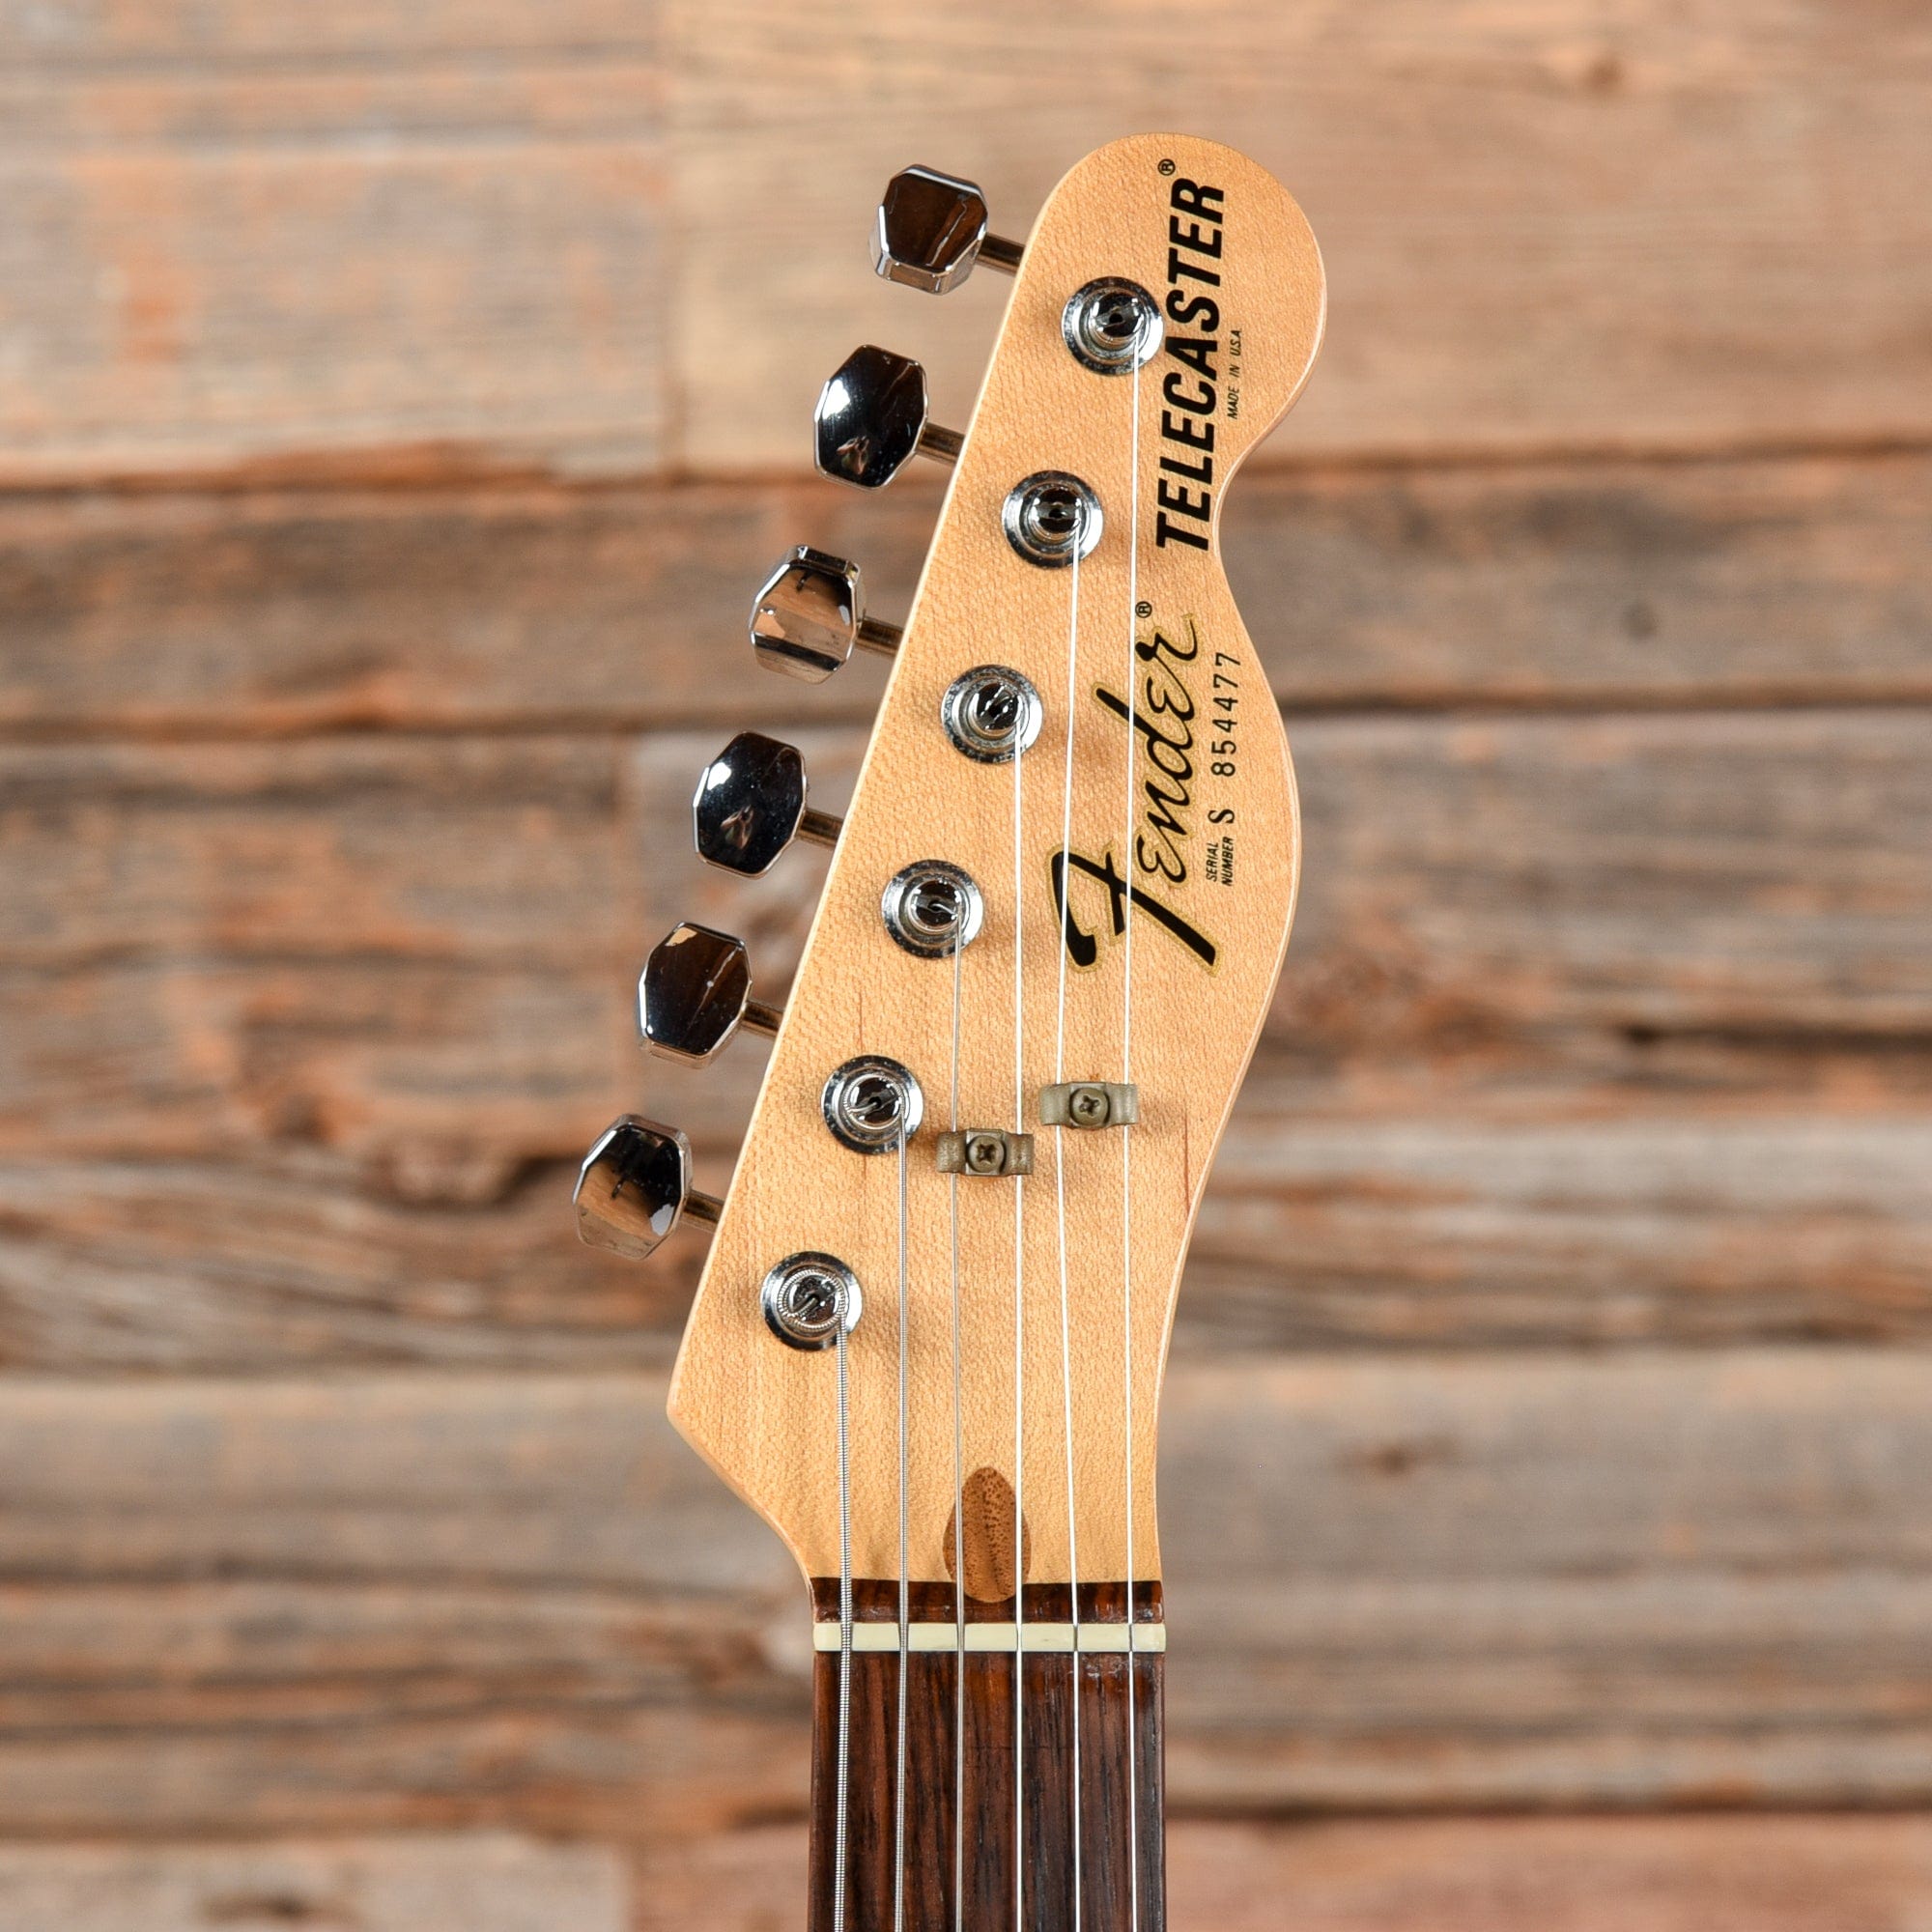 Fender Telecaster Black 1982 Electric Guitars / Solid Body